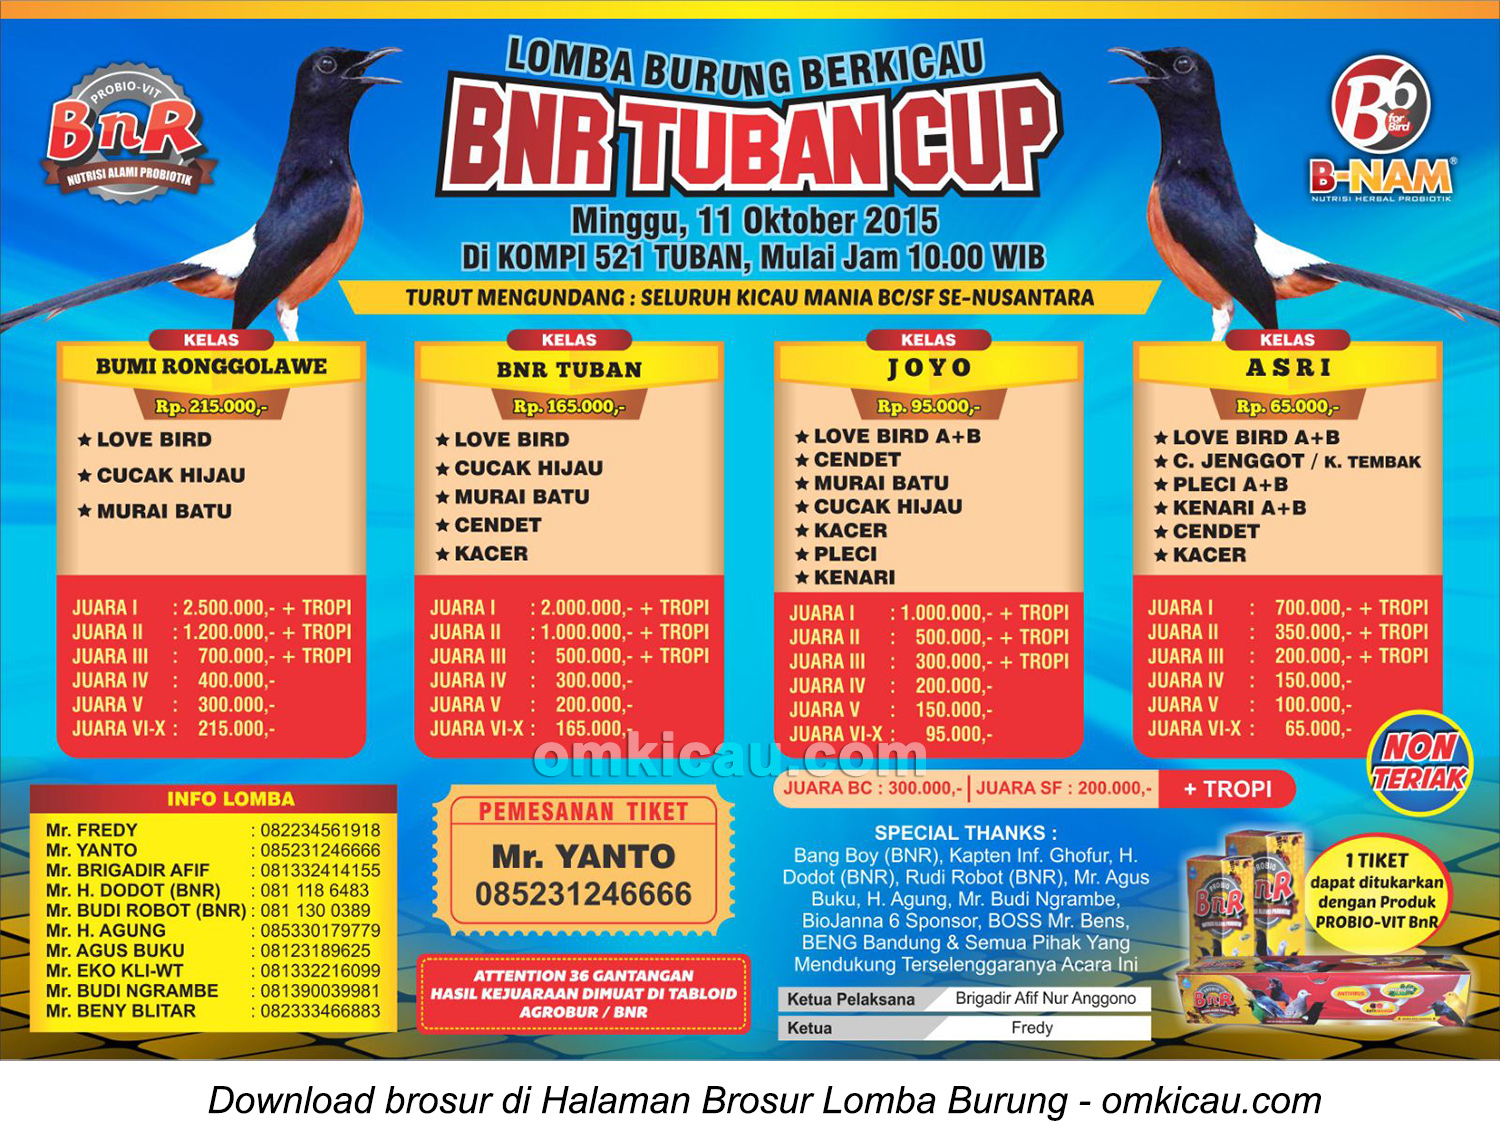 Brosur Lomba Burung Berkicau BnR Tuban Cup, 11 Oktober 2015